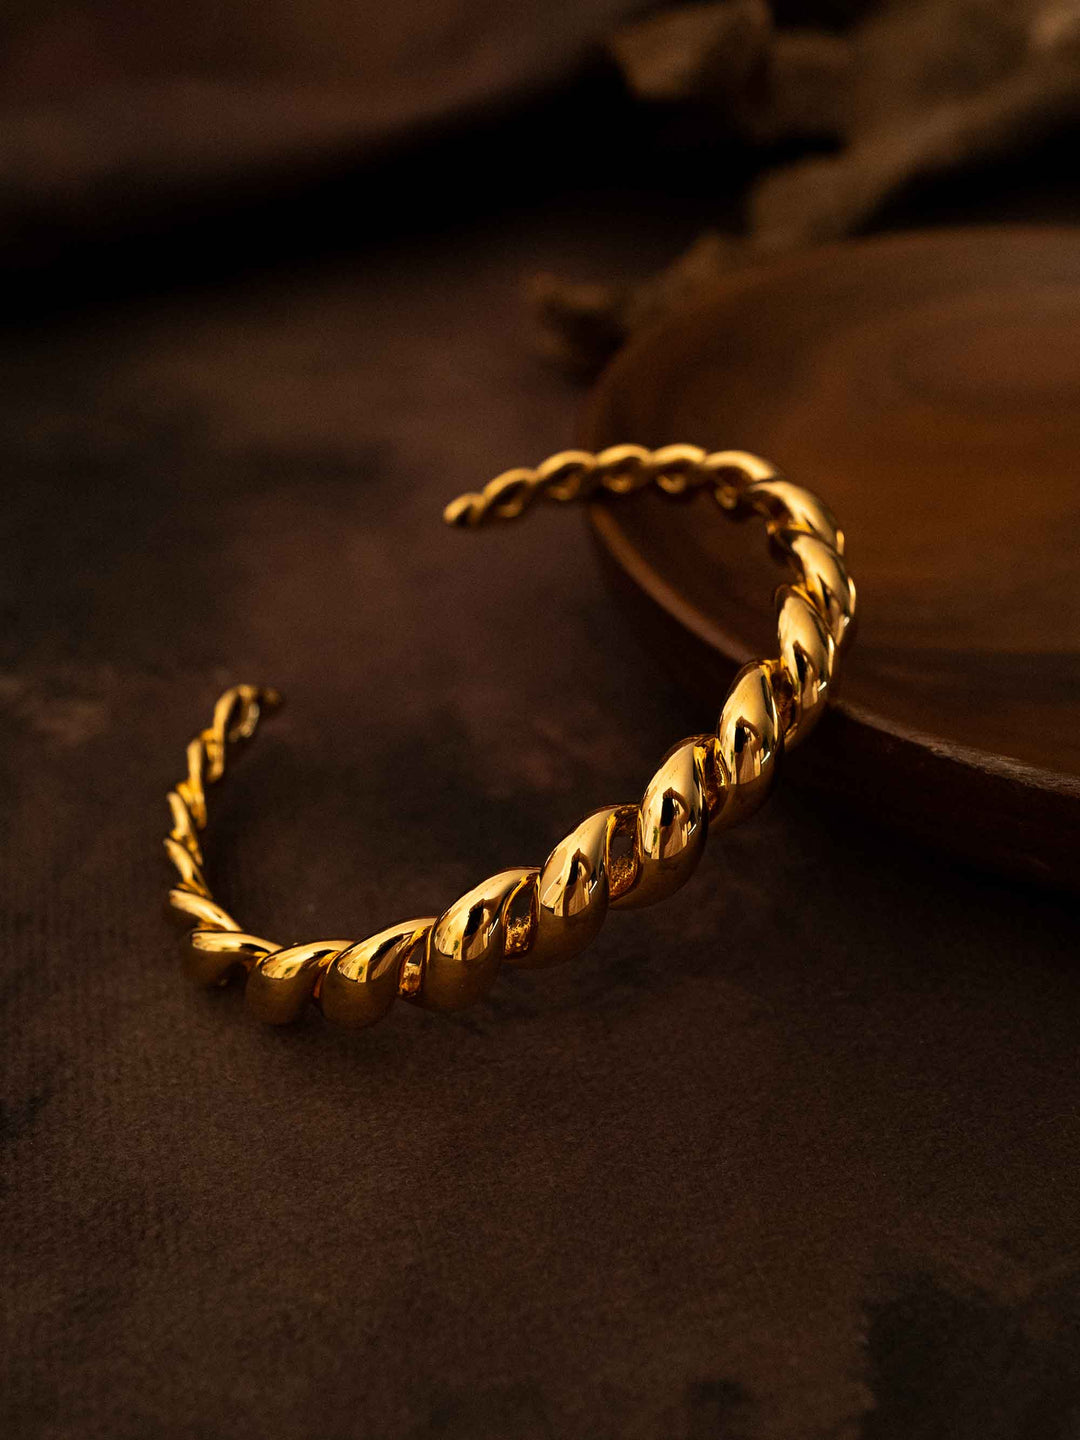 A golden twist bracelet